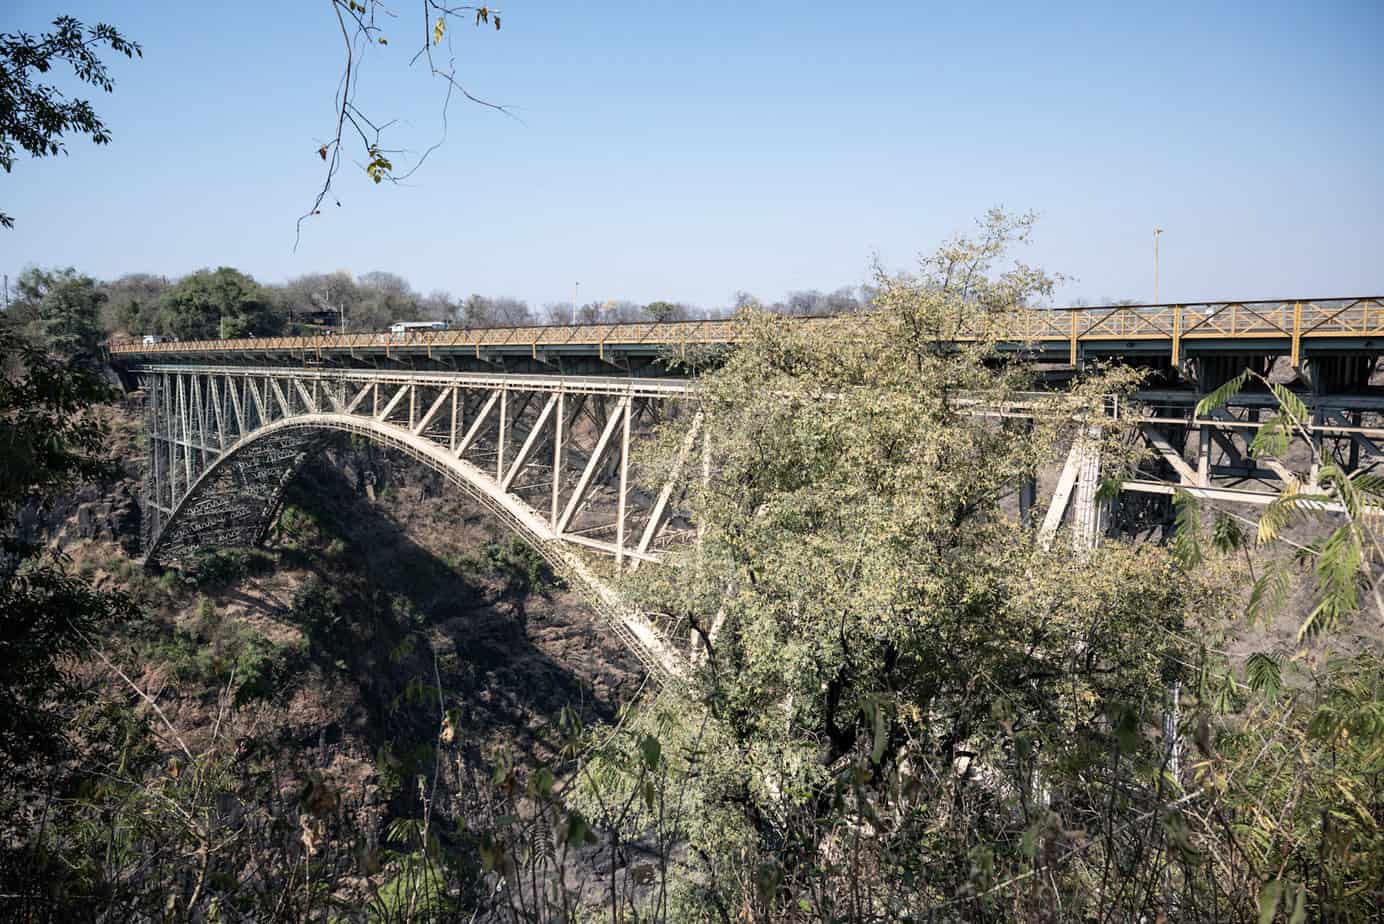 The bridge connecting Zambia and Zimbabwe